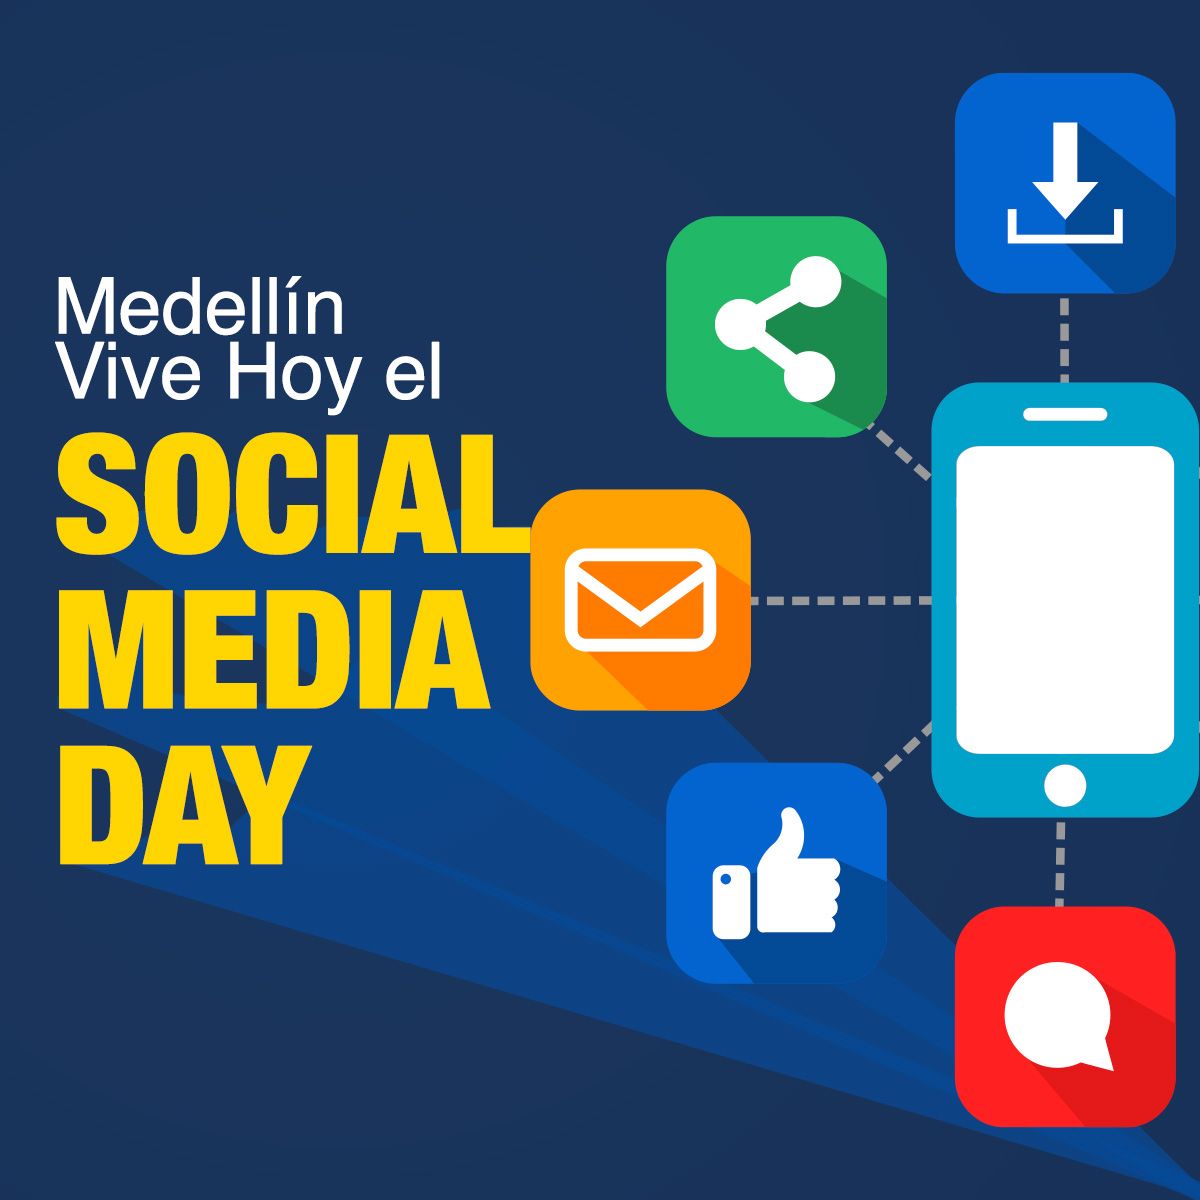 Medellín Vive Hoy el Social Media Day